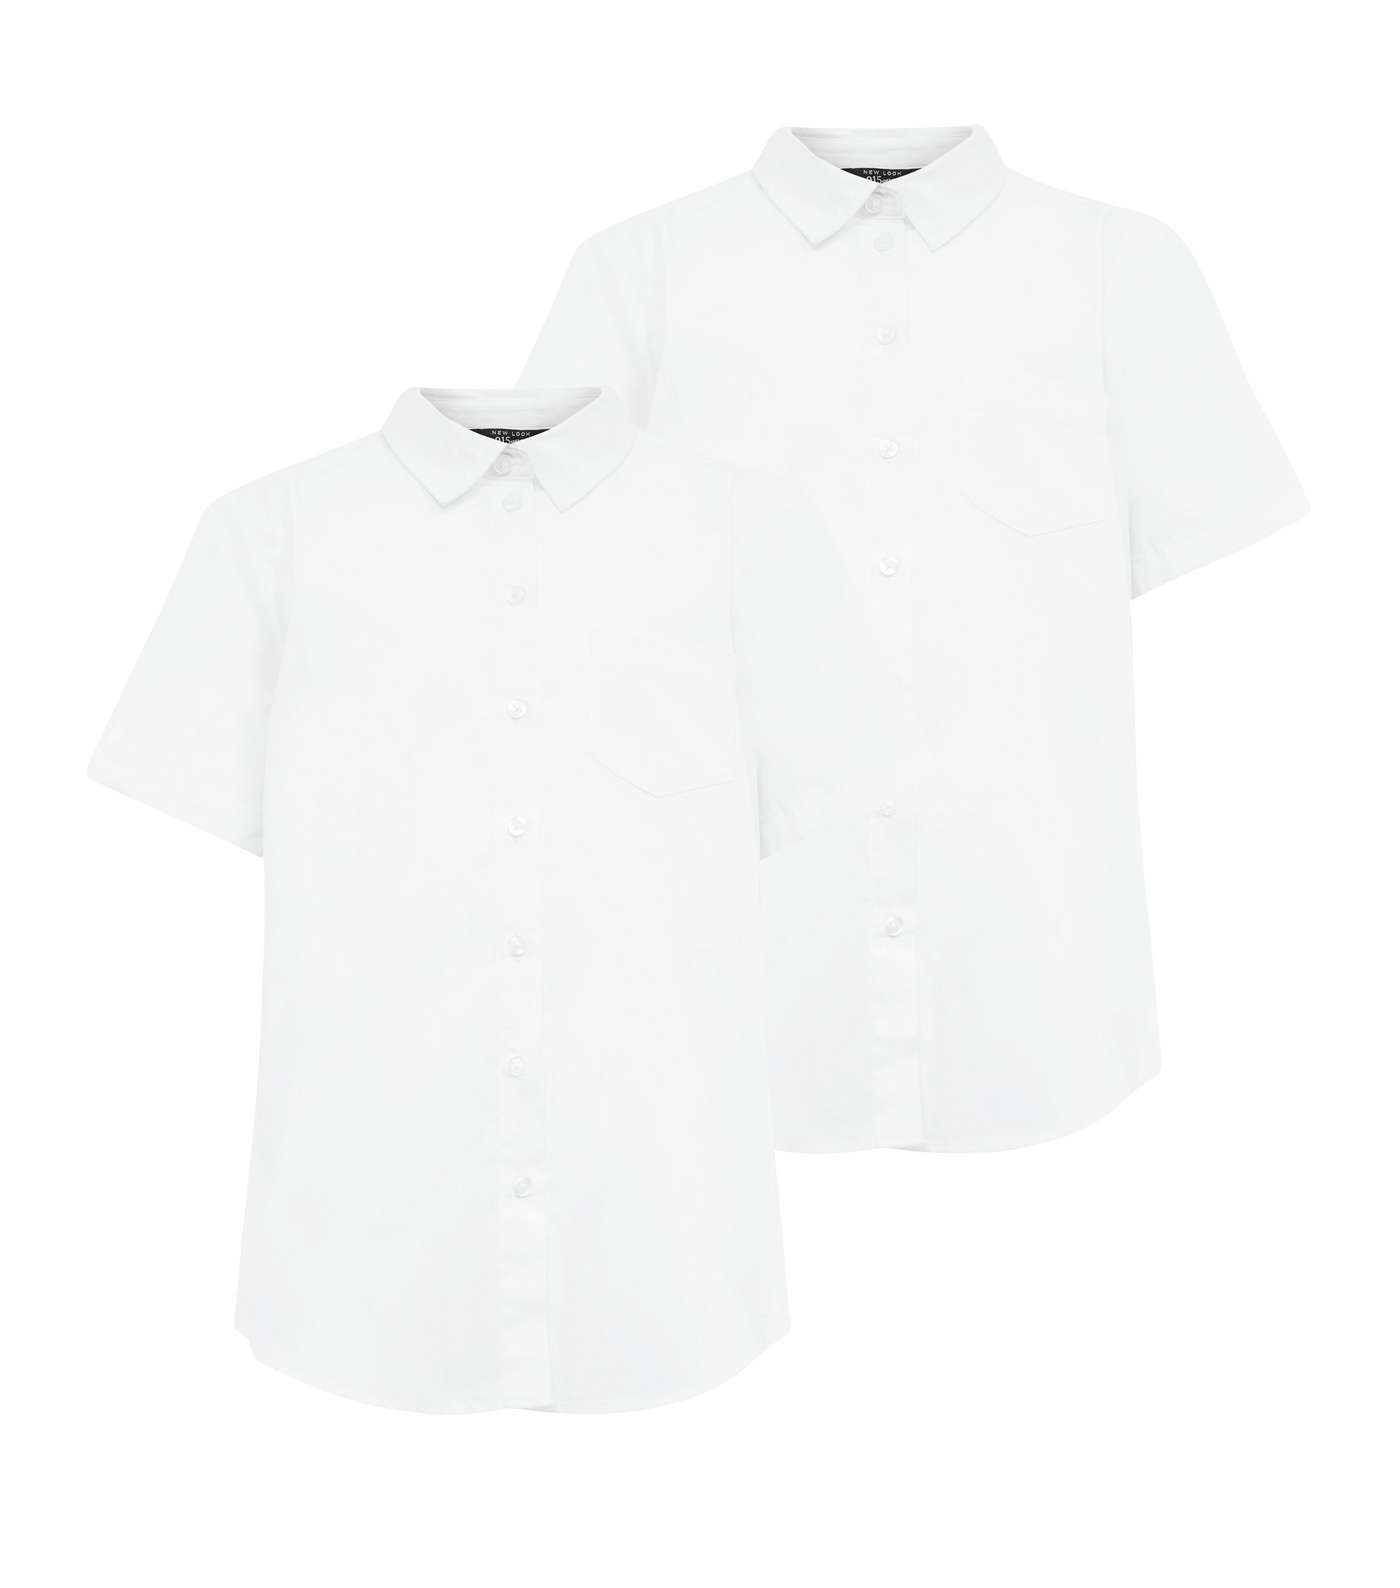 Girls 2 Pack White Short Sleeve School Shirts Image 4